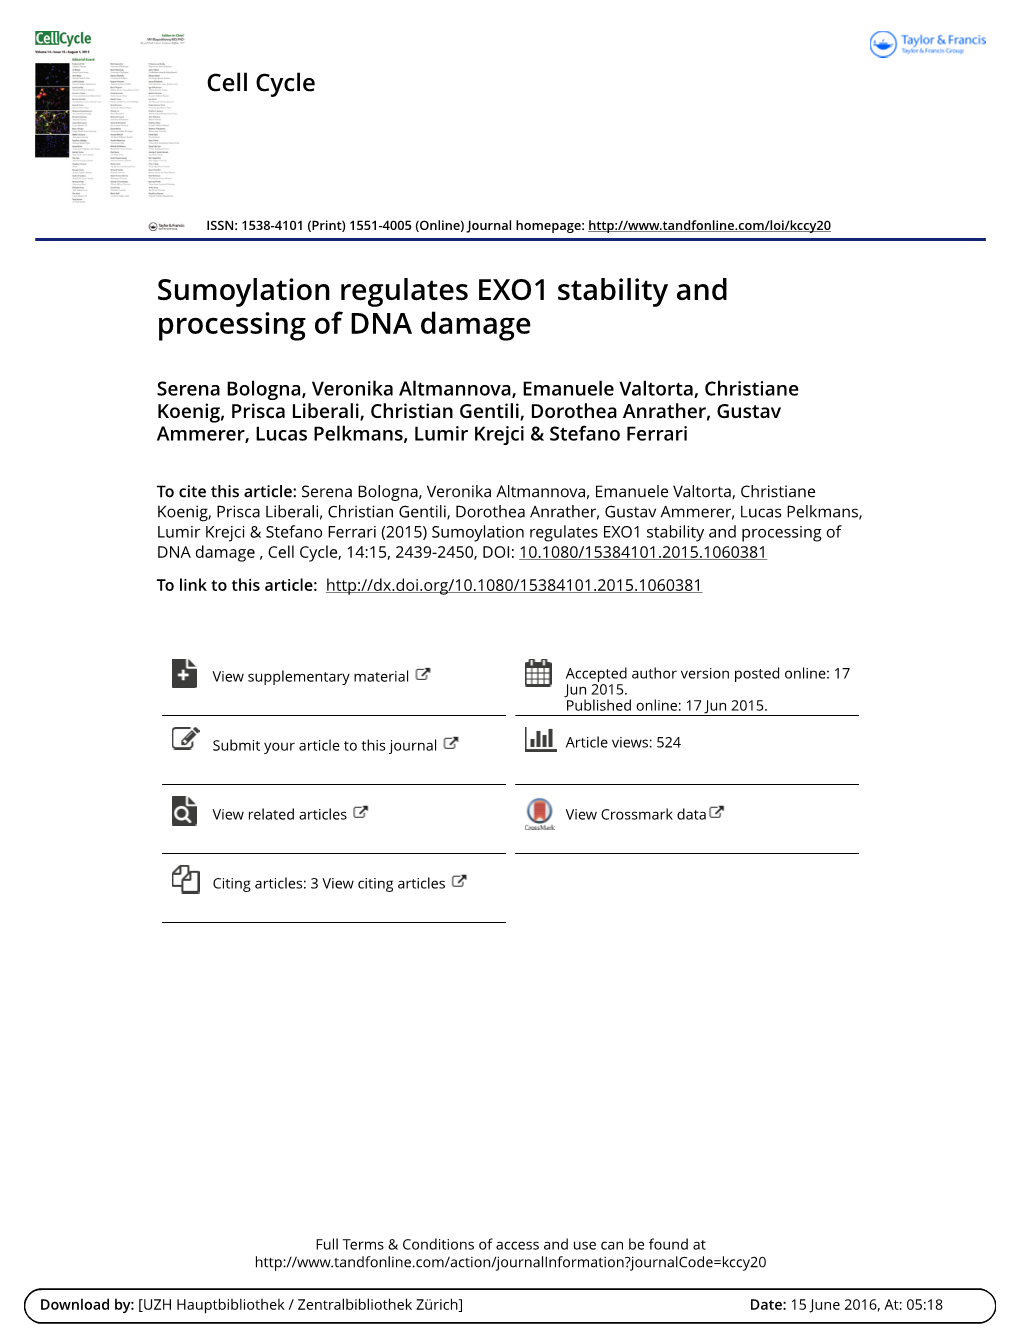 Sumoylation Regulates EXO1 Stability and Processing of DNA Damage